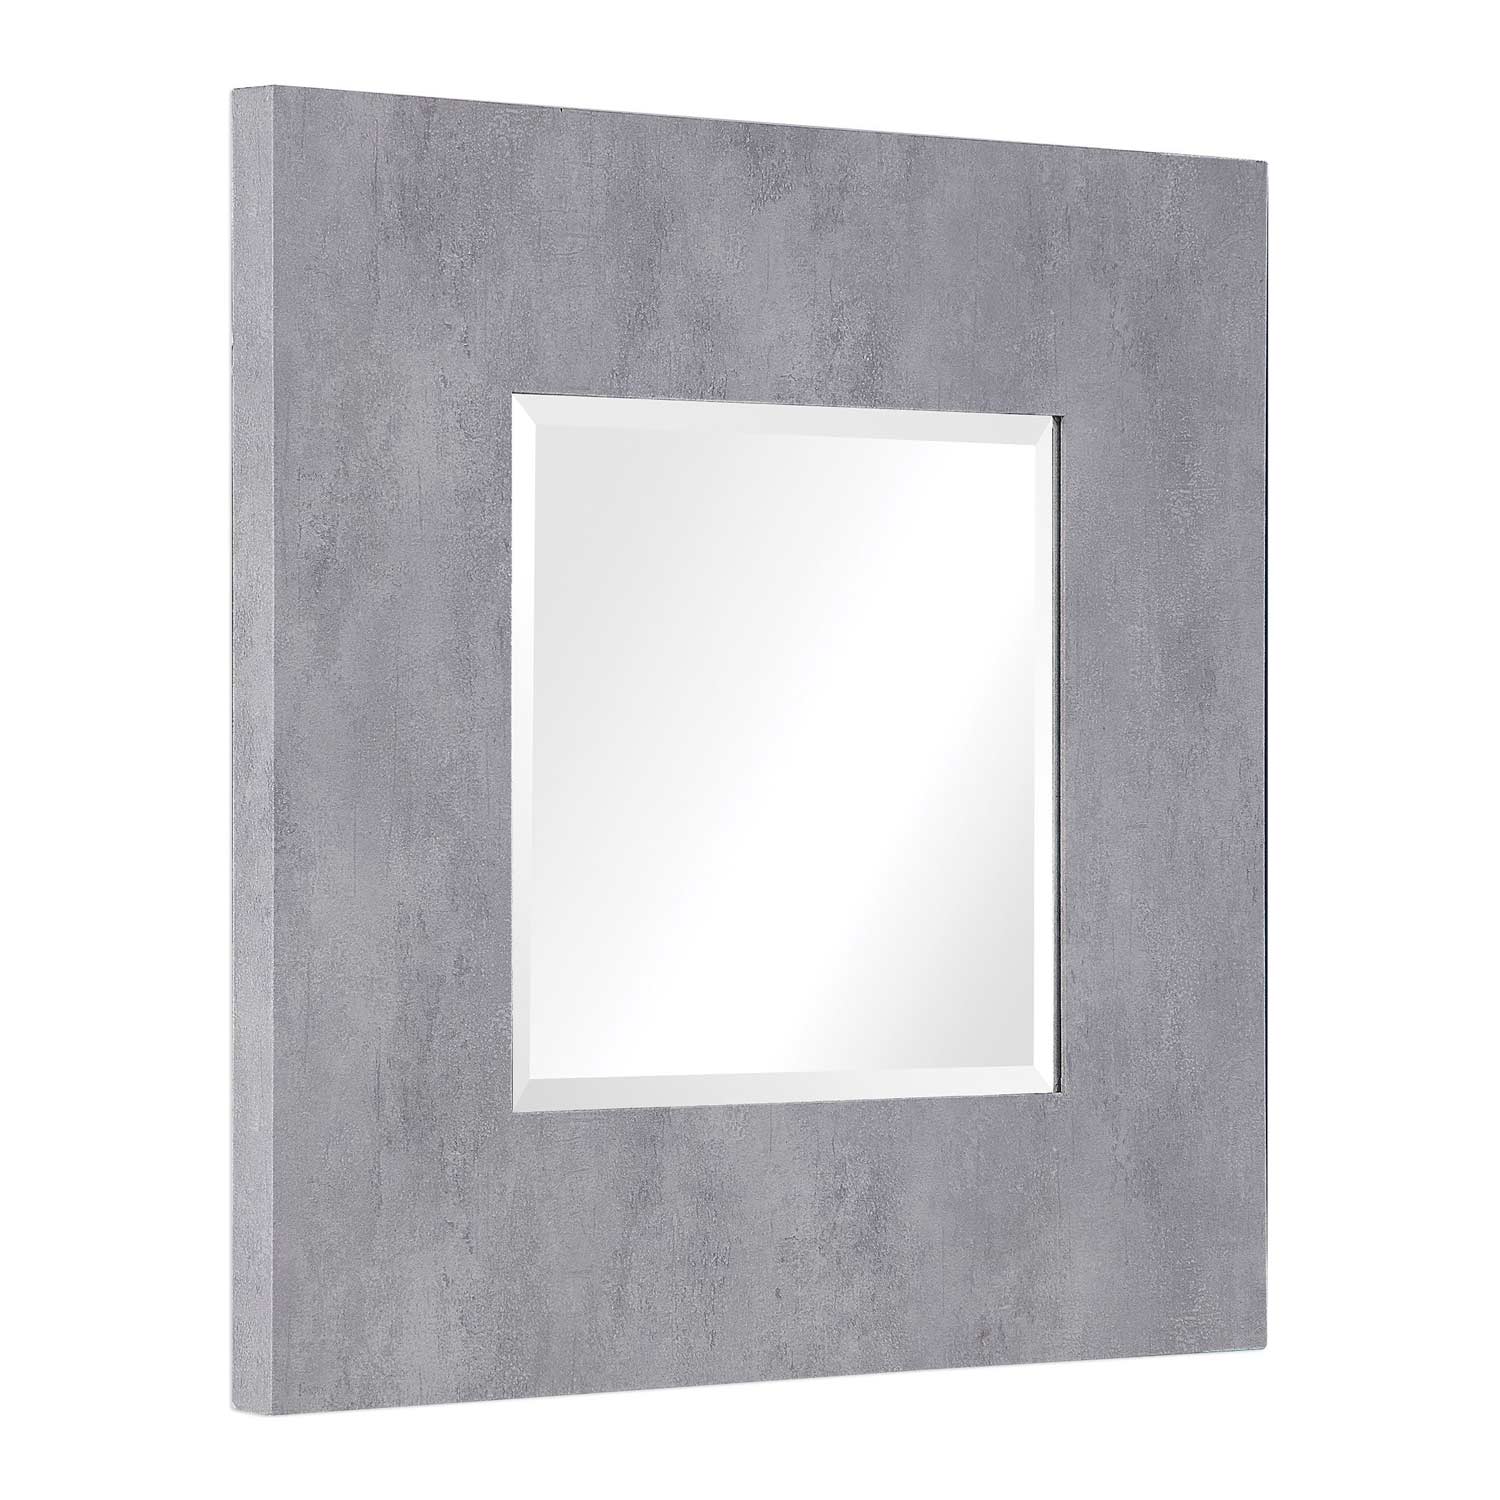 Uttermost Rohan Square Mirror - Light Gray